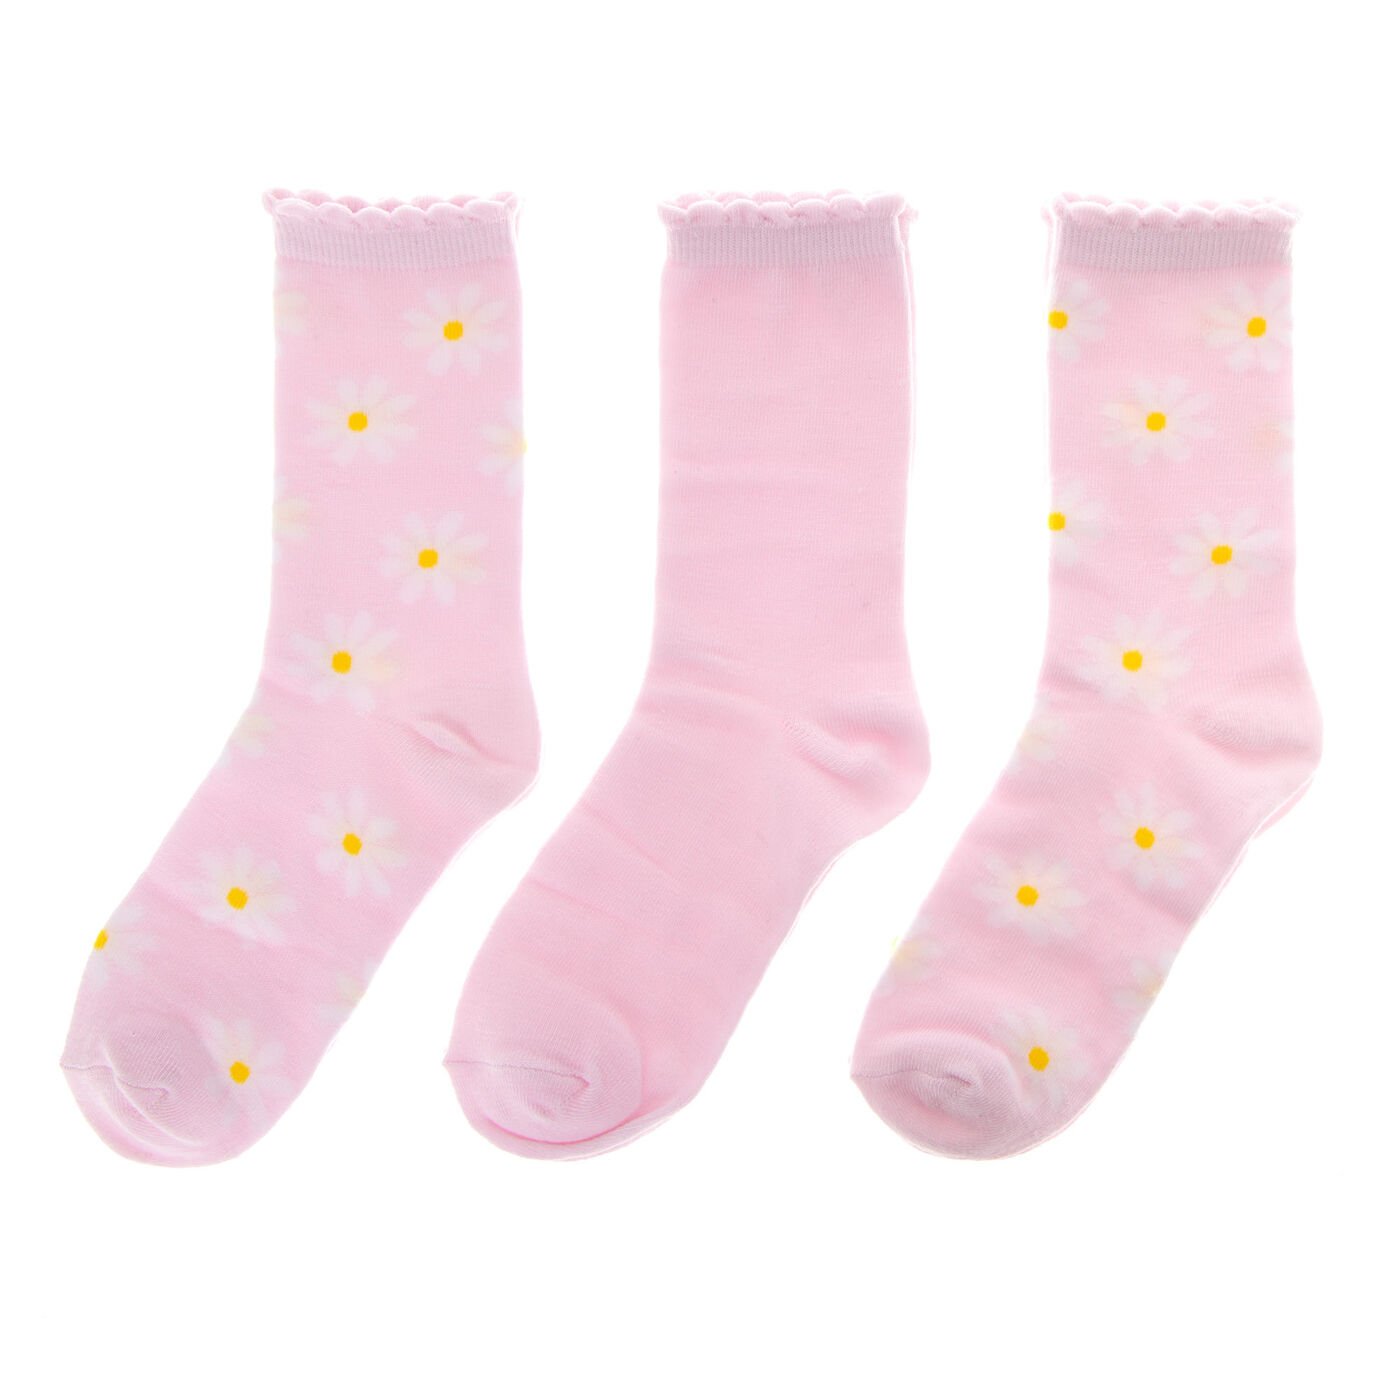 Buy Amazing Mum Socks Gift Set - 3 Pairs for GBP 3.99 | Card Factory UK